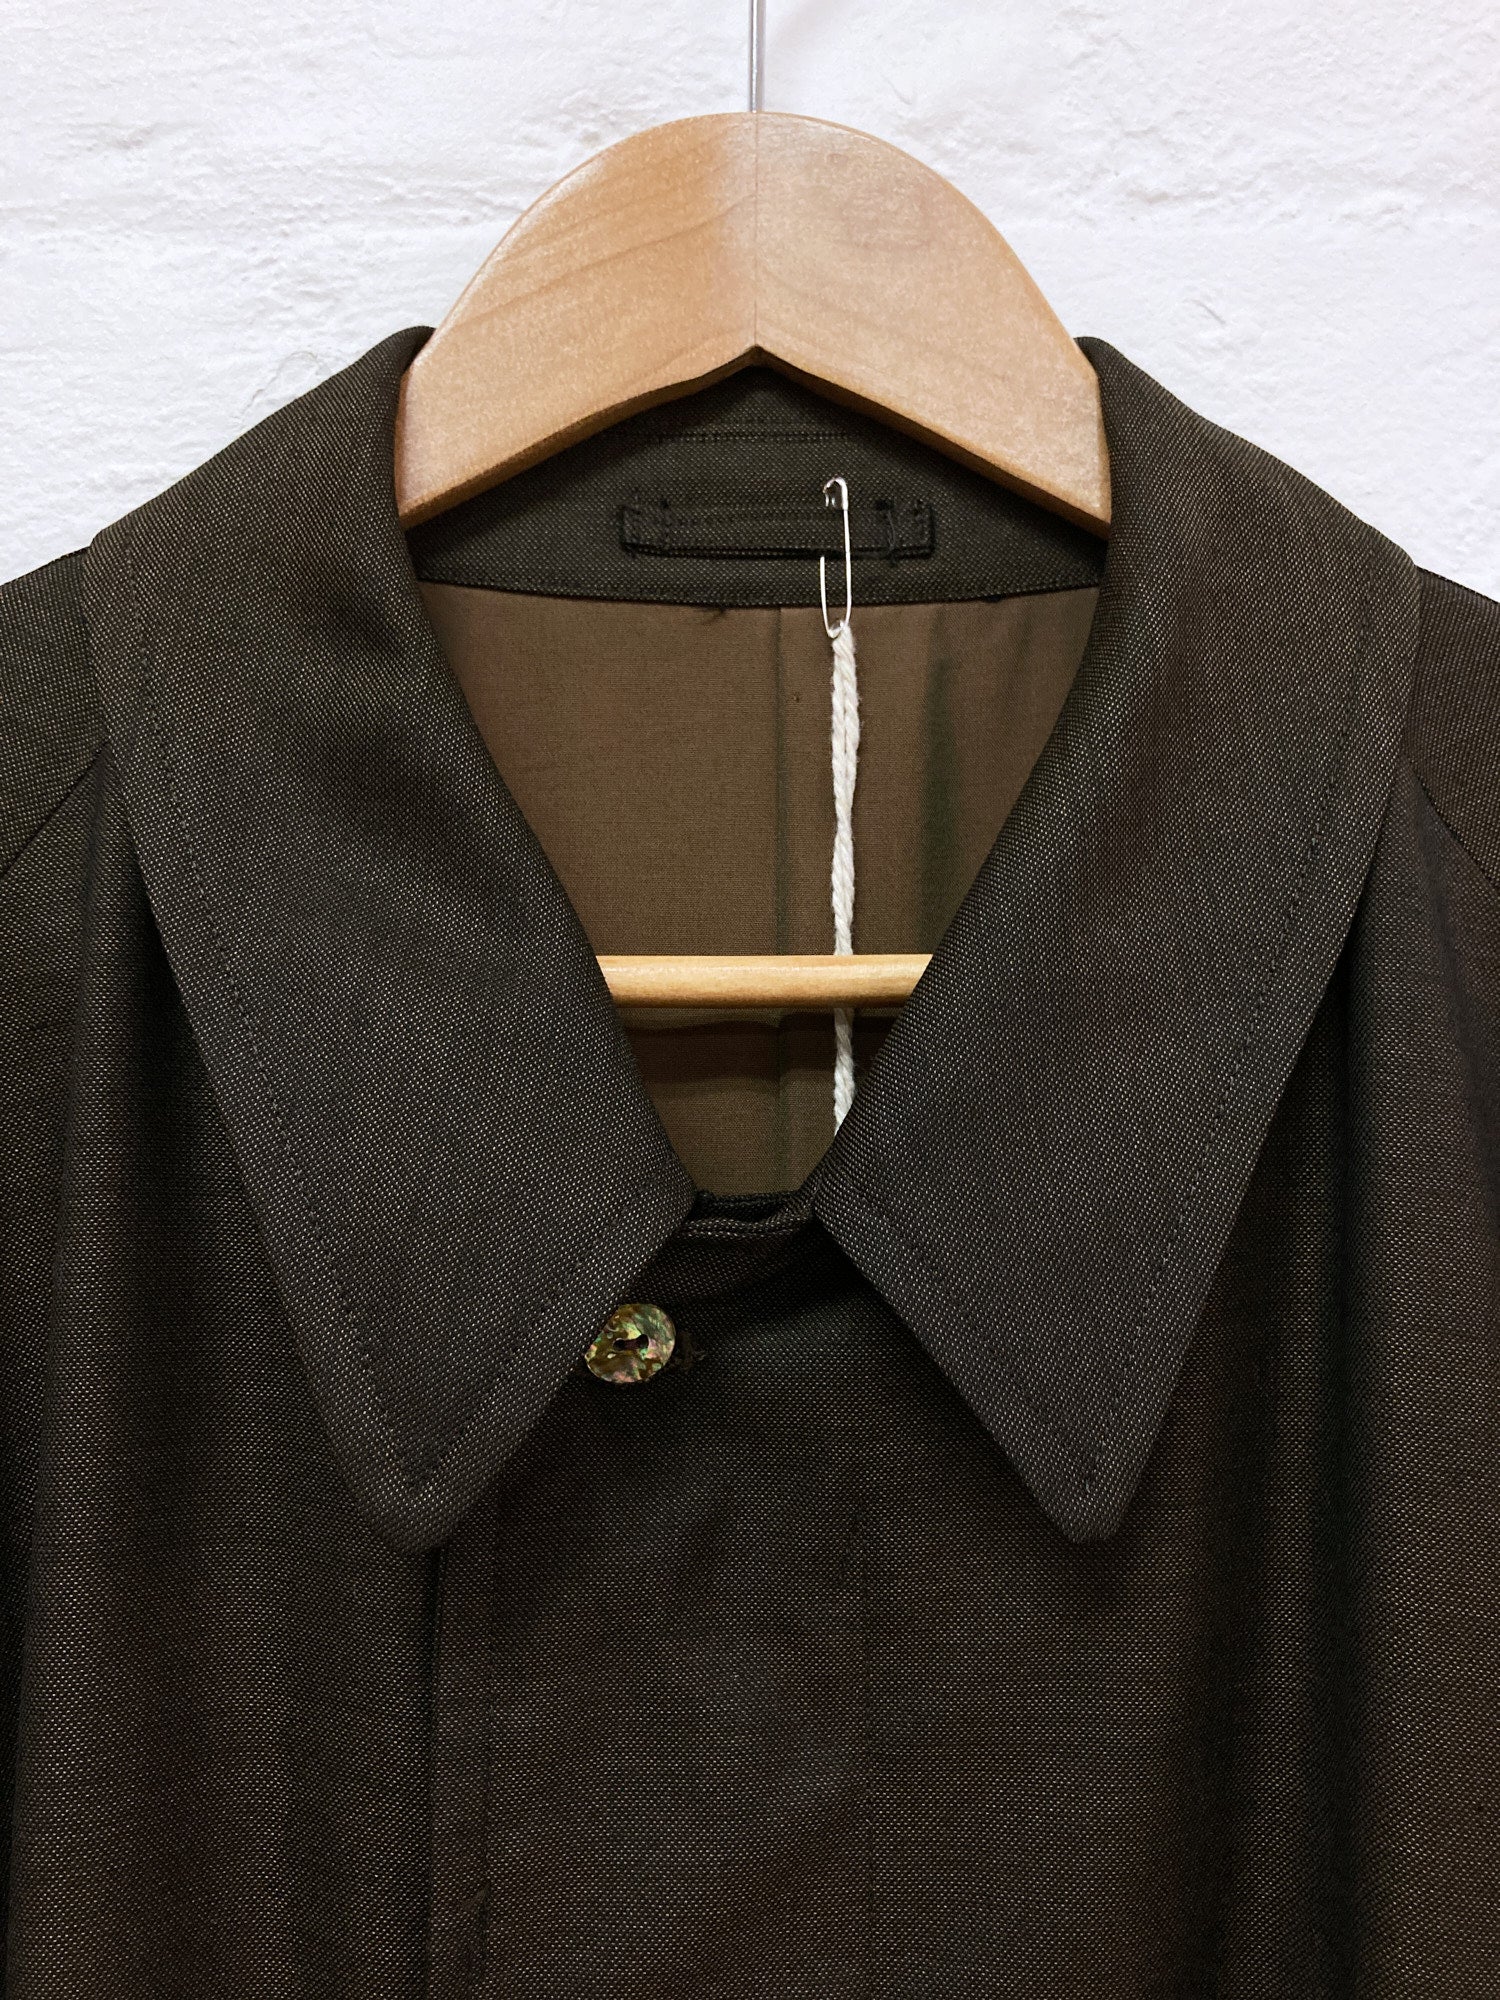 Grass men’s 1980s brown wool silk covered placket mackintosh coat - M L